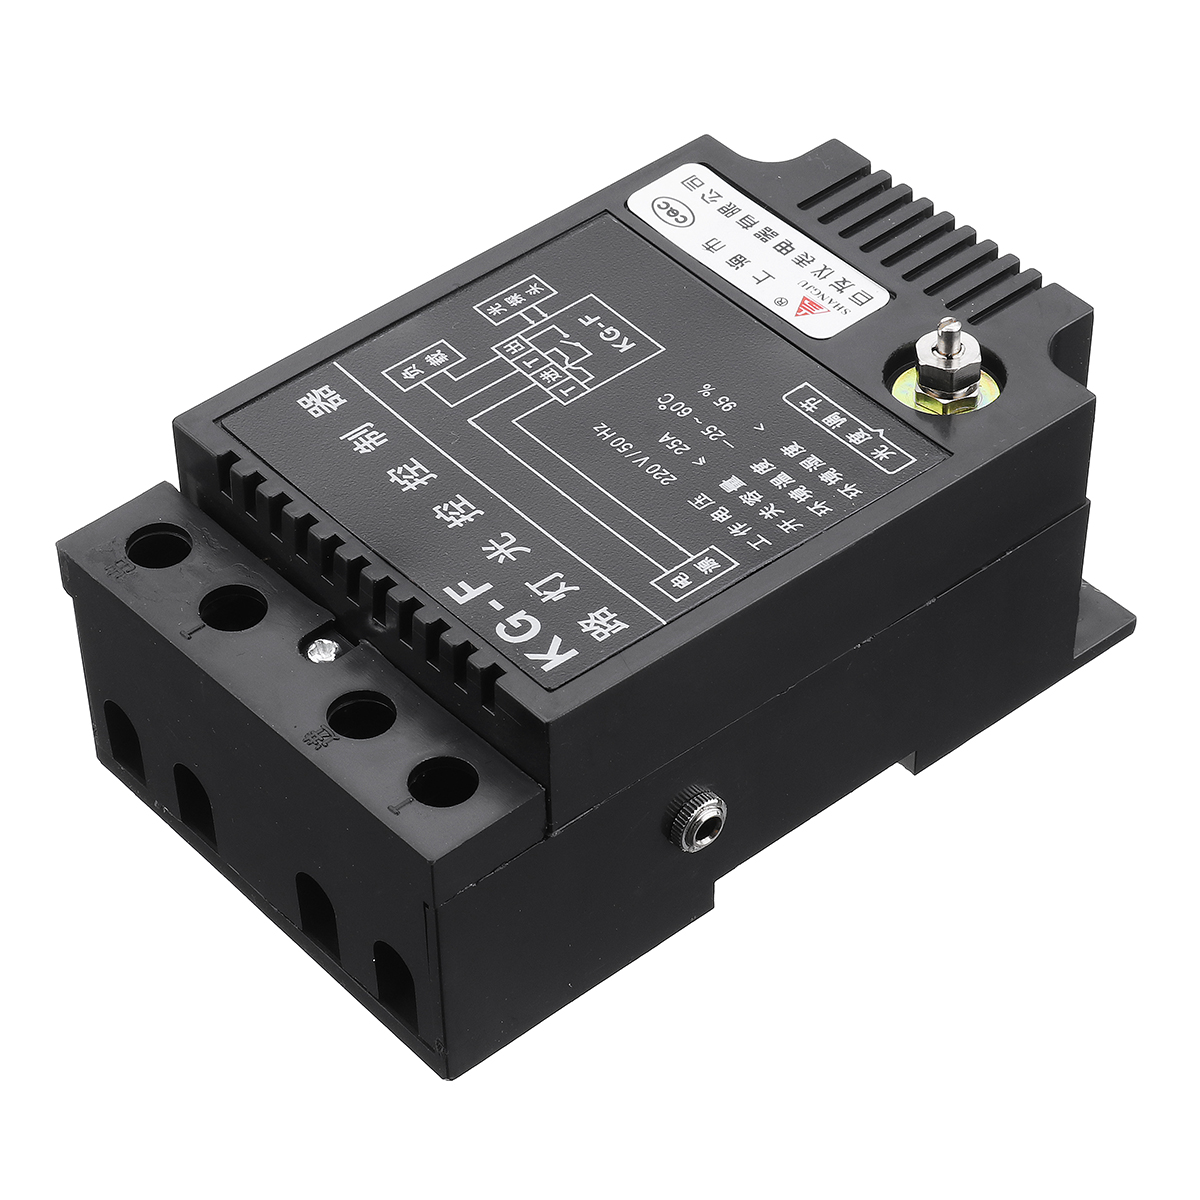 KG-F-220V-Light-Control-Switch-Automatic-Corridor-Light-Sensor-Adjustable-Intelligent-Street-Lamp-Co-1420007-8